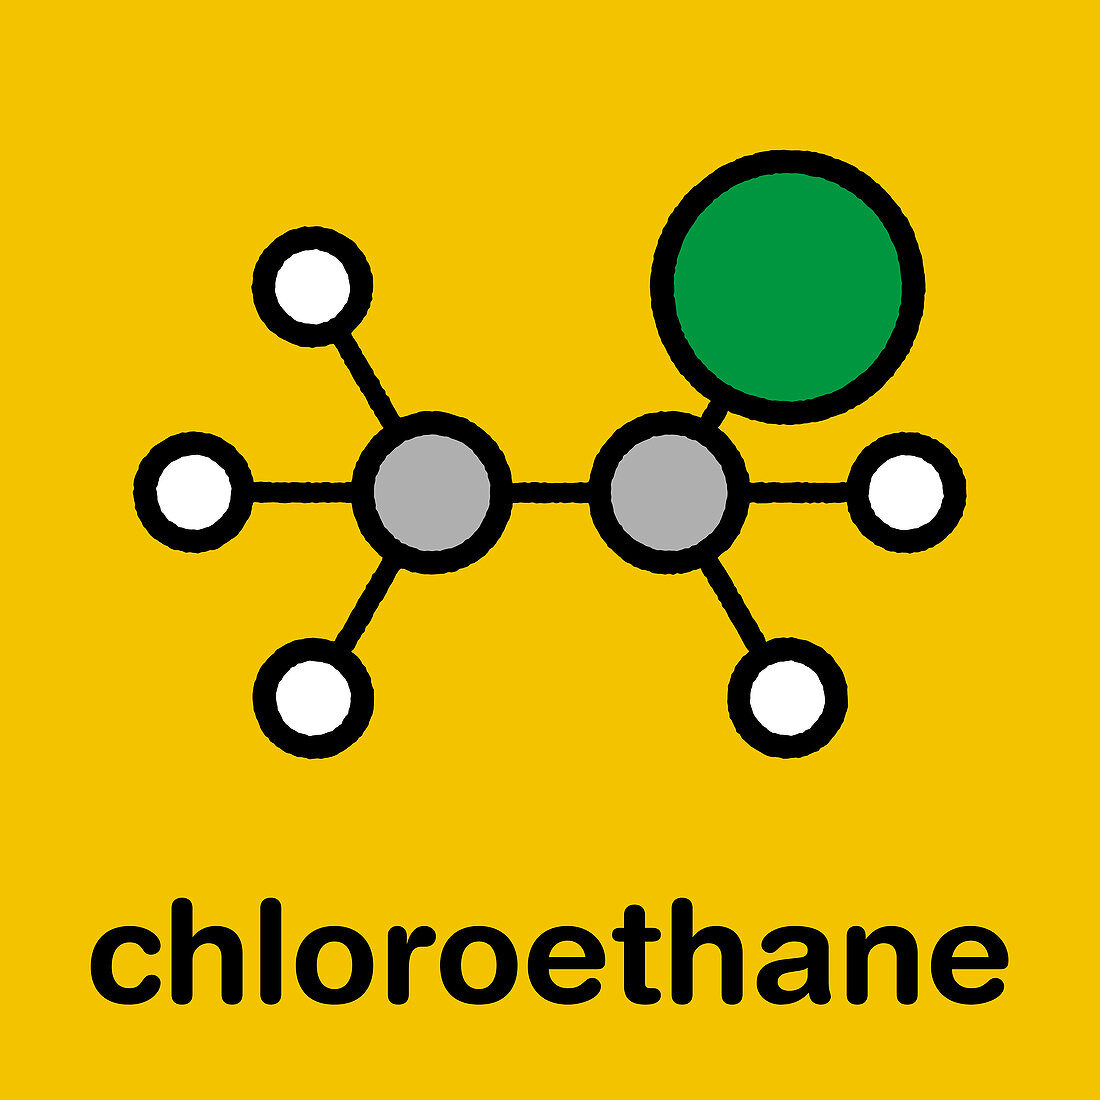 Chloroethane local anaesthetic molecule, illustration